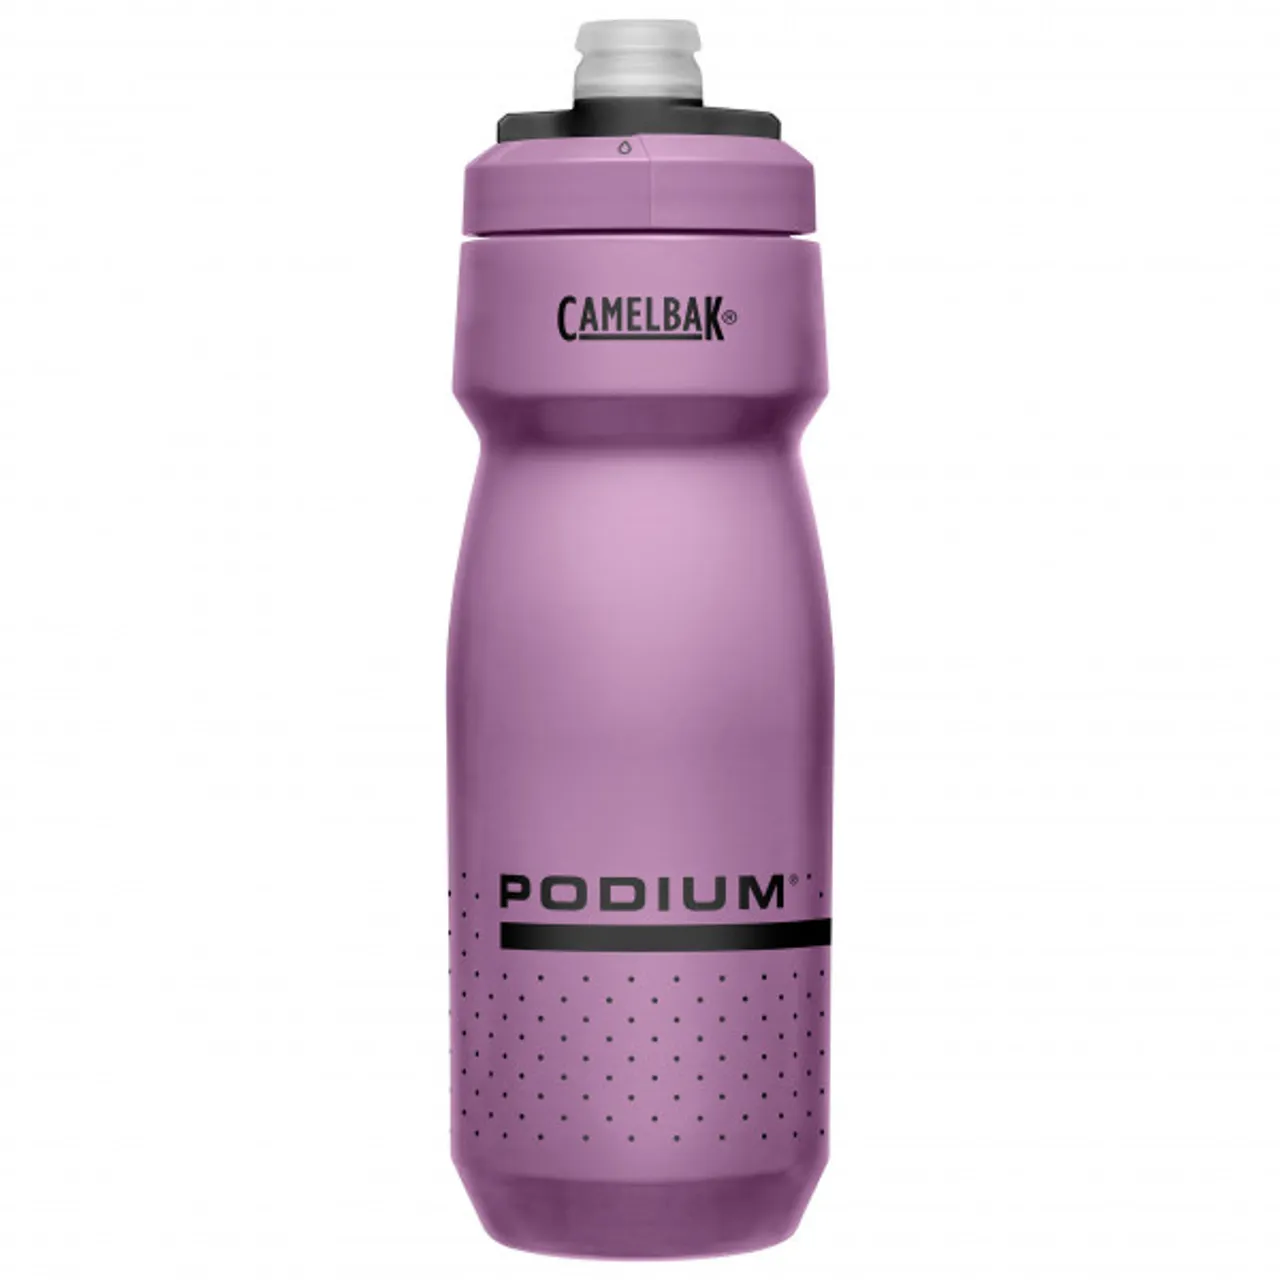 Camelbak - Podium - Water bottle size 620 ml, pink/purple